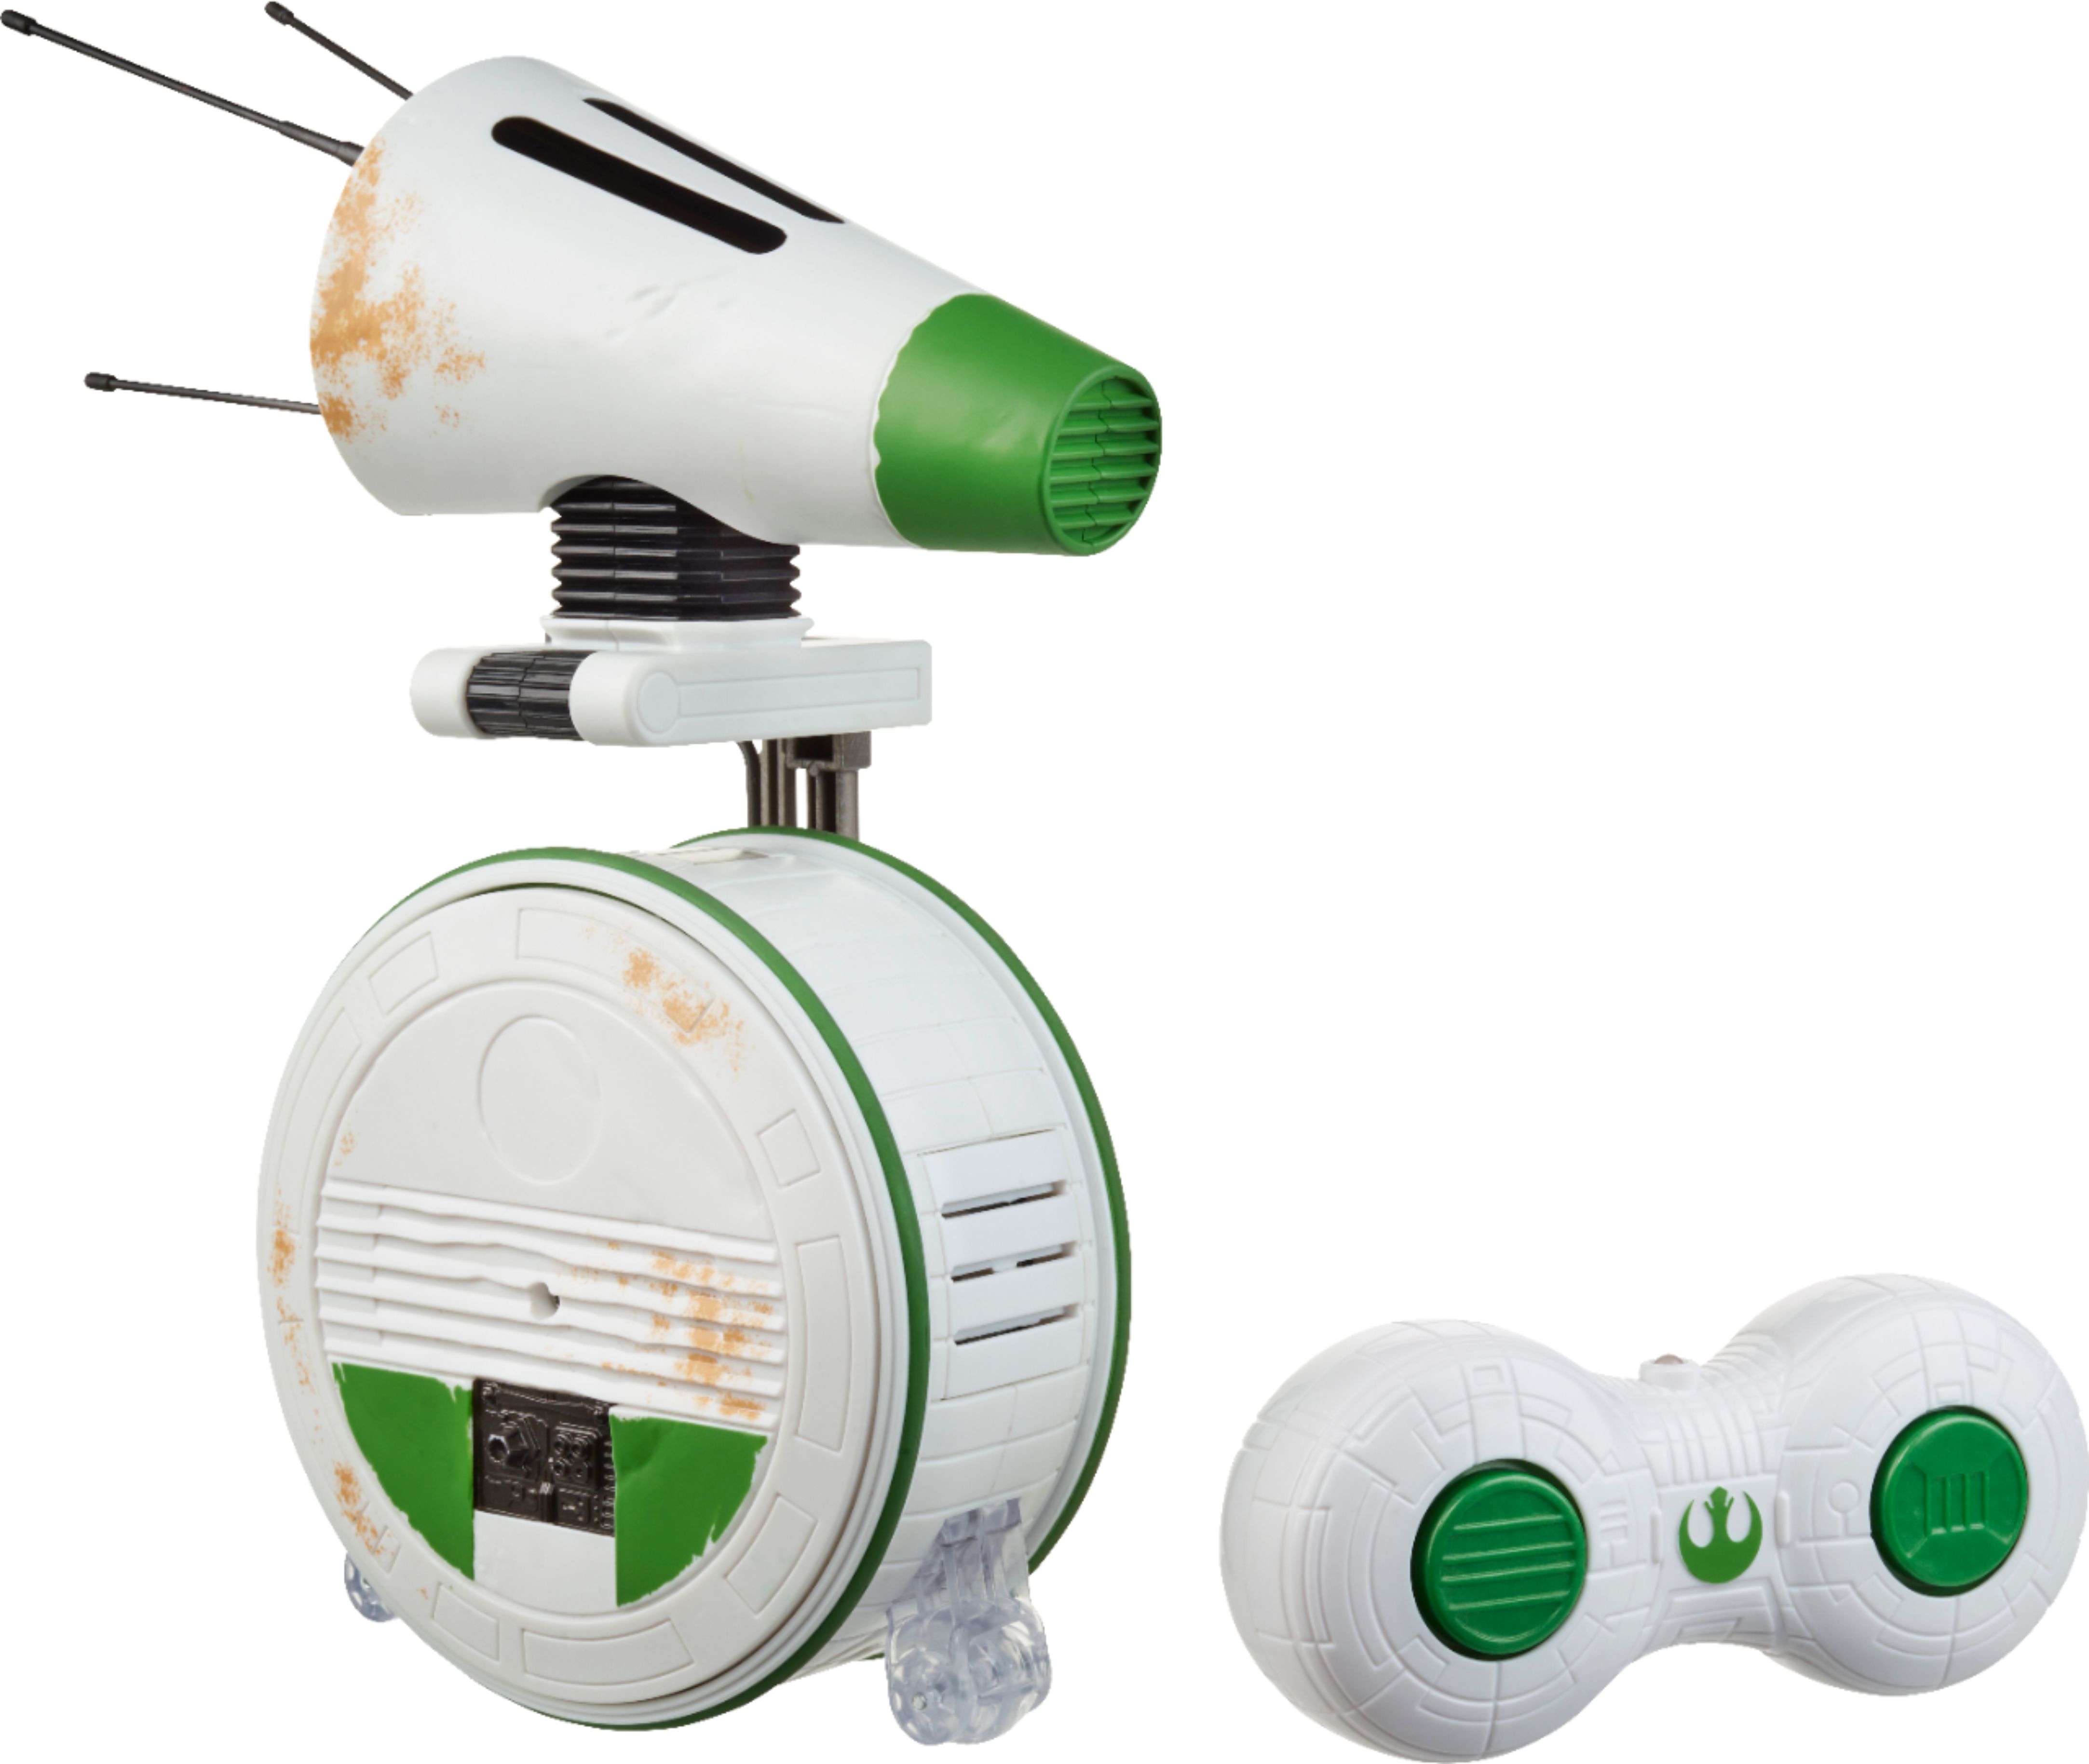 star wars remote control toys